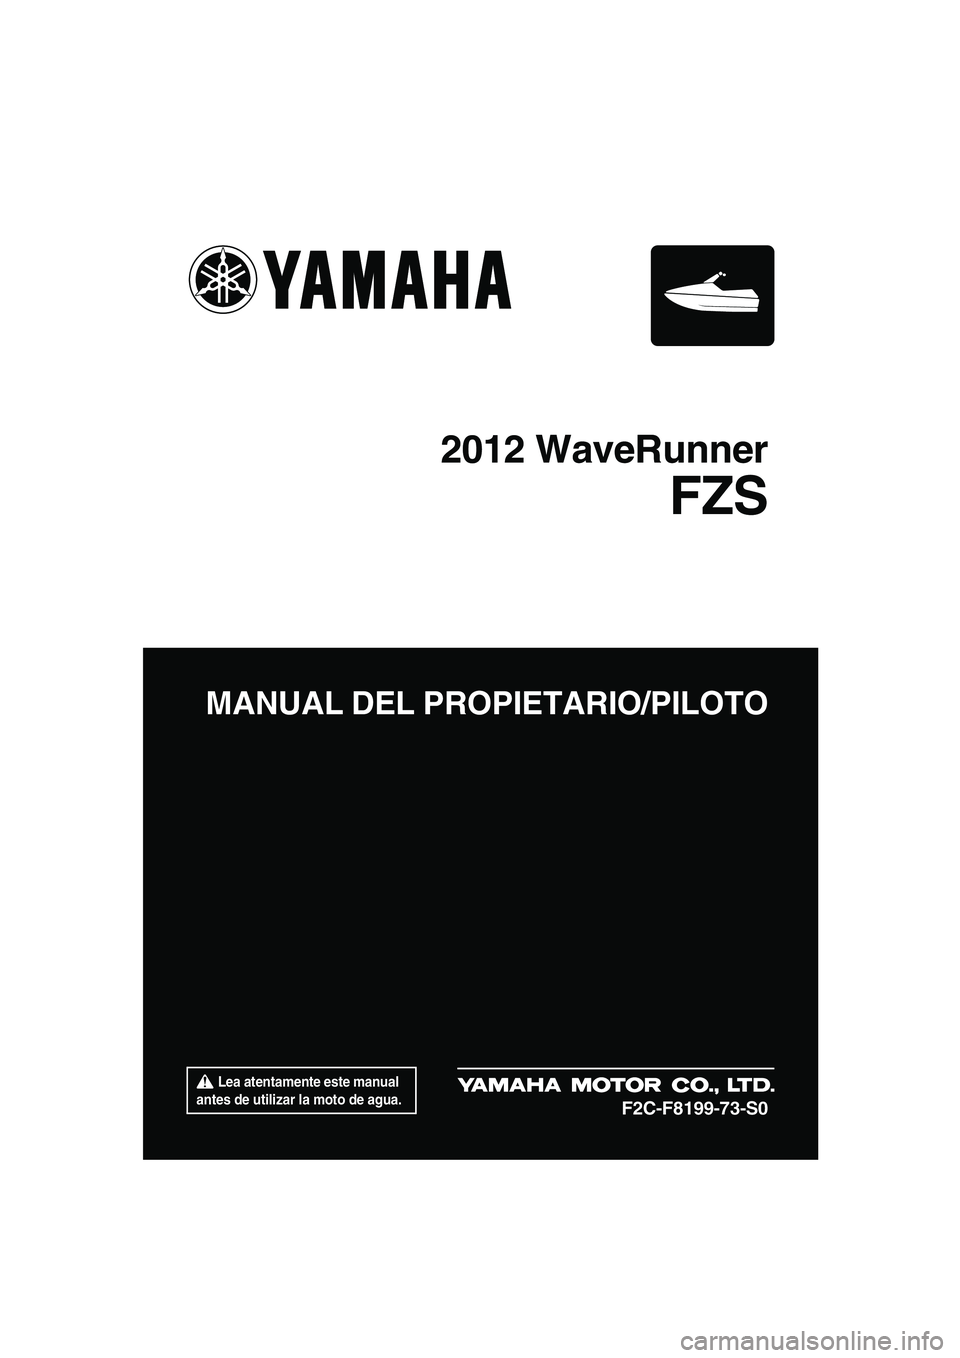 YAMAHA FZS 2012  Manuale de Empleo (in Spanish)  Lea atentamente este manual 
antes de utilizar la moto de agua.
MANUAL DEL PROPIETARIO/PILOTO
2012 WaveRunner
FZS
F2C-F8199-73-S0
UF2C73S0.book  Page 1  Thursday, June 23, 2011  2:08 PM 